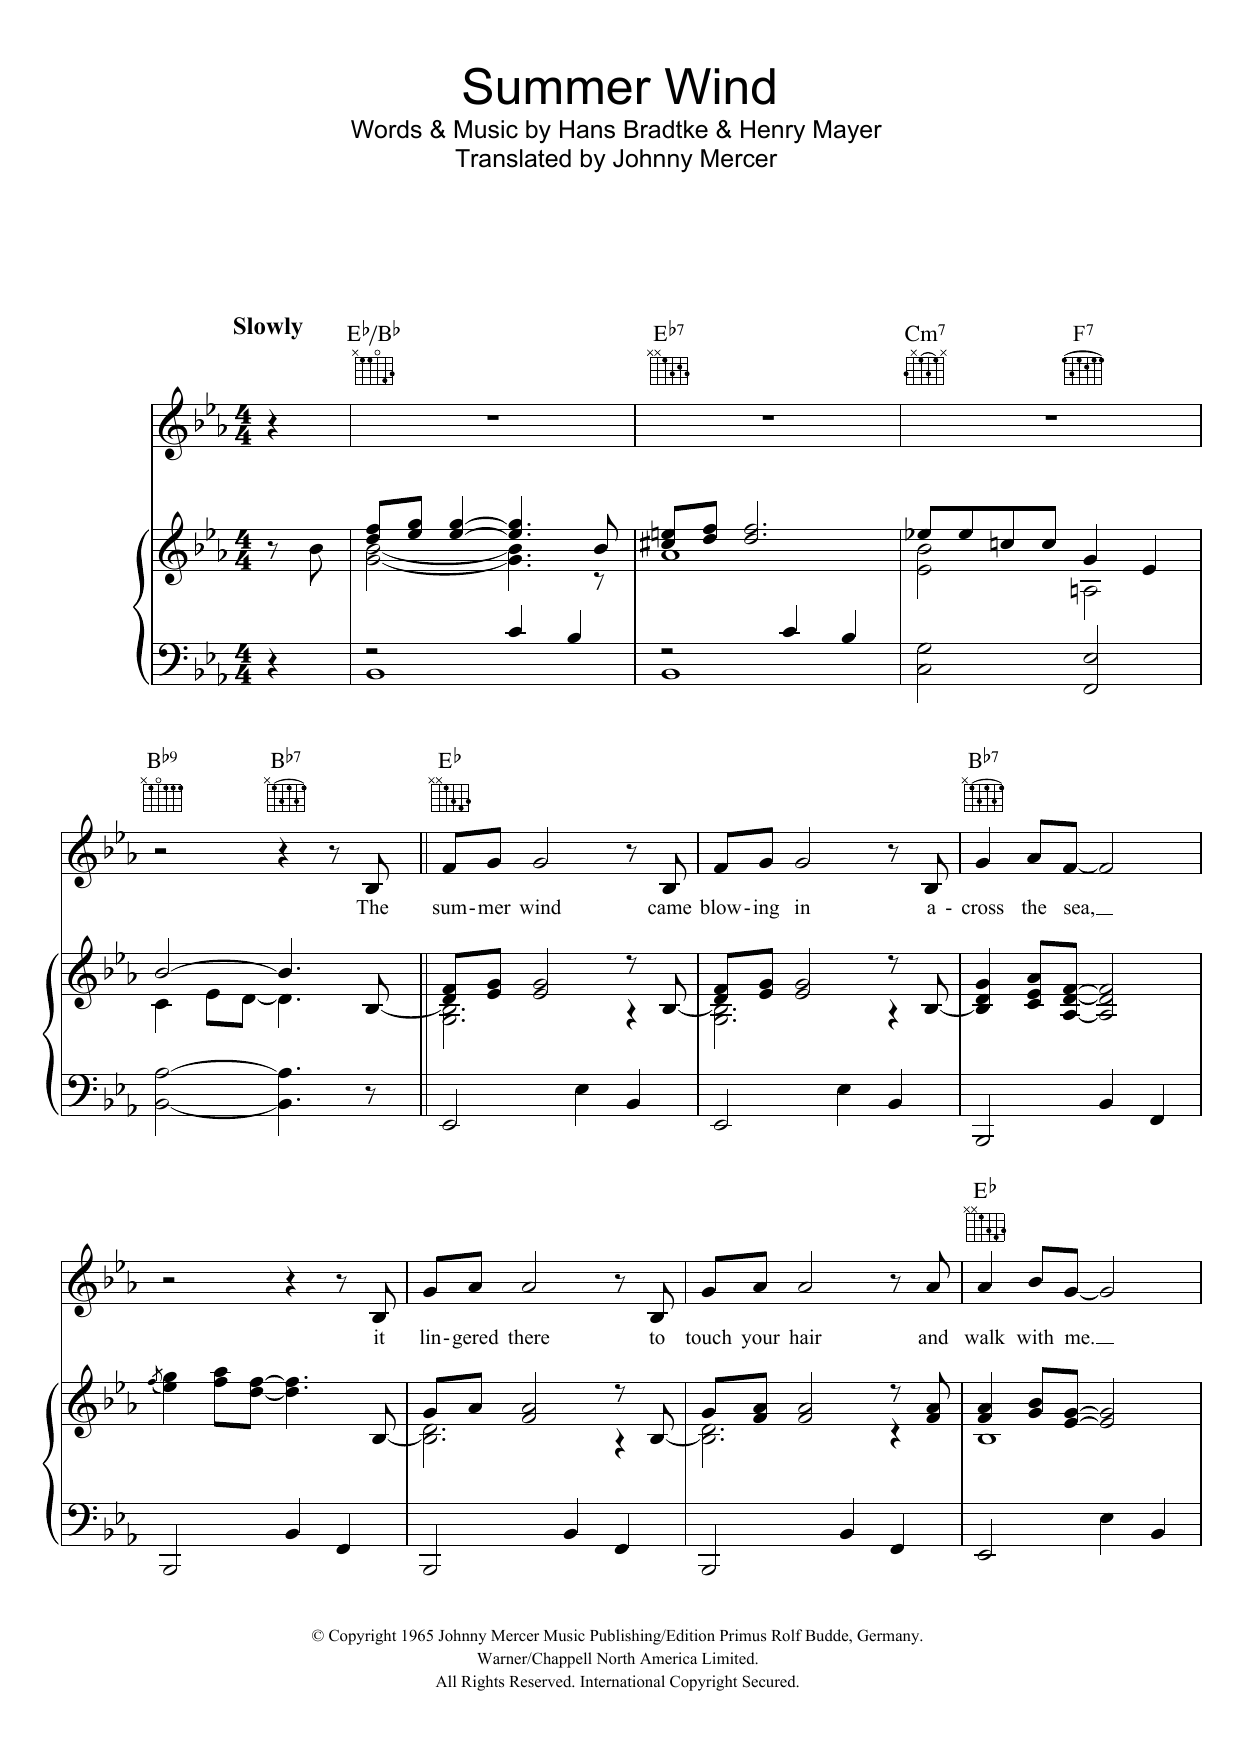 Frank Sinatra Summer Wind Sheet Music Notes & Chords for Ukulele - Download or Print PDF